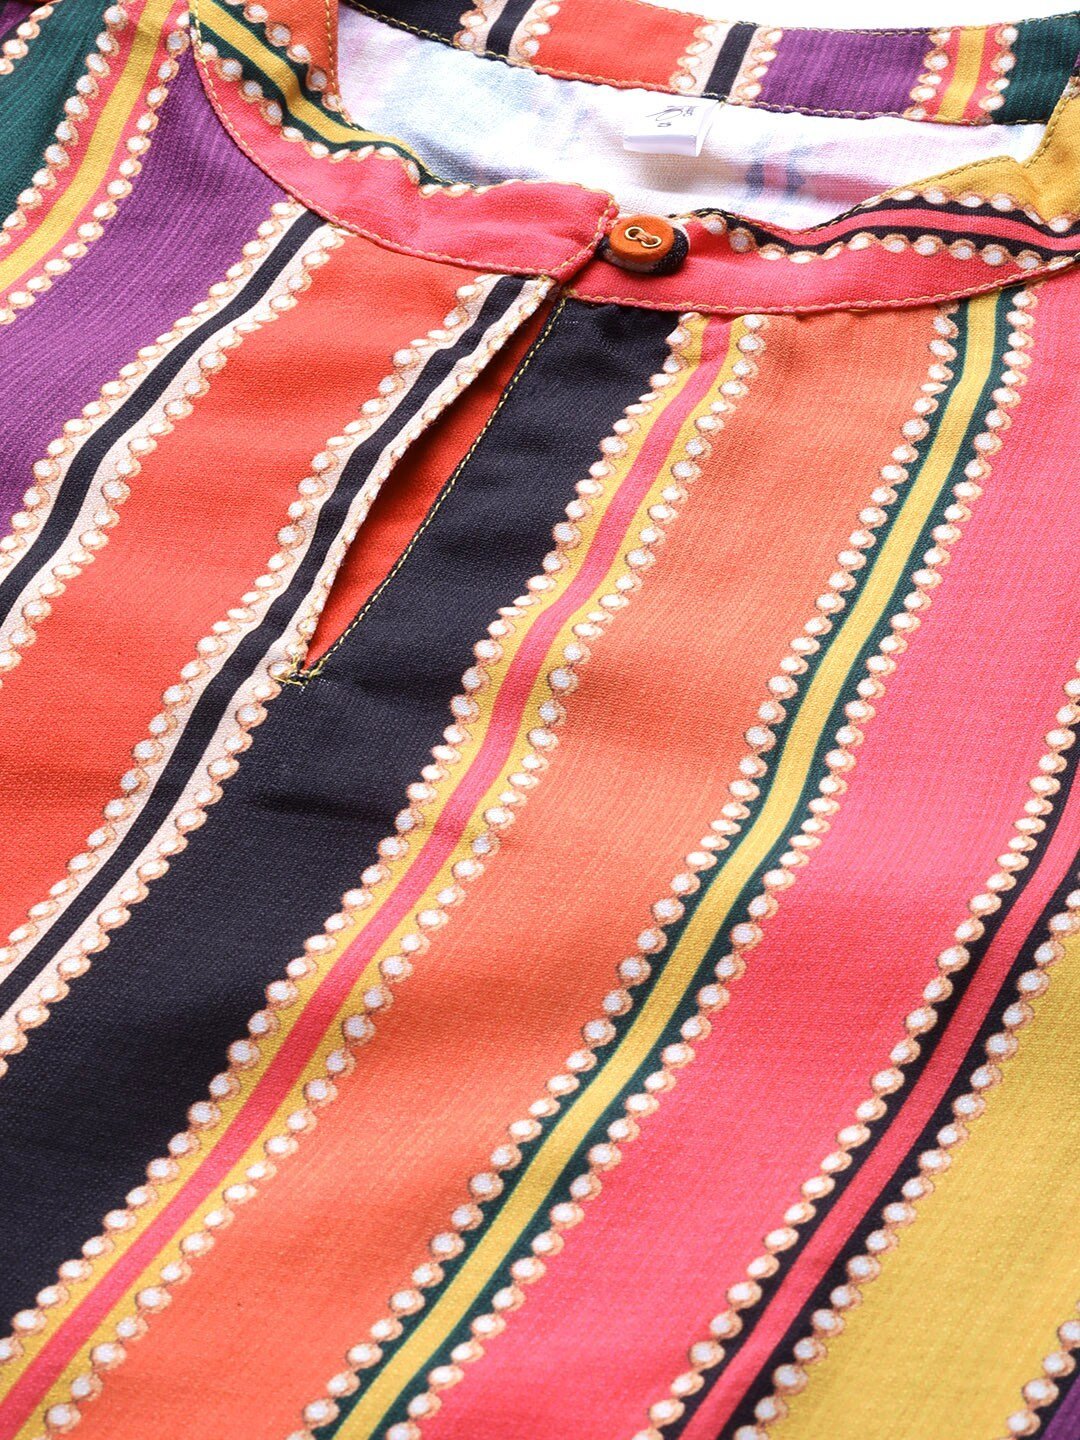 Women's  Multicoloured Striped Straight Kurta - AKS